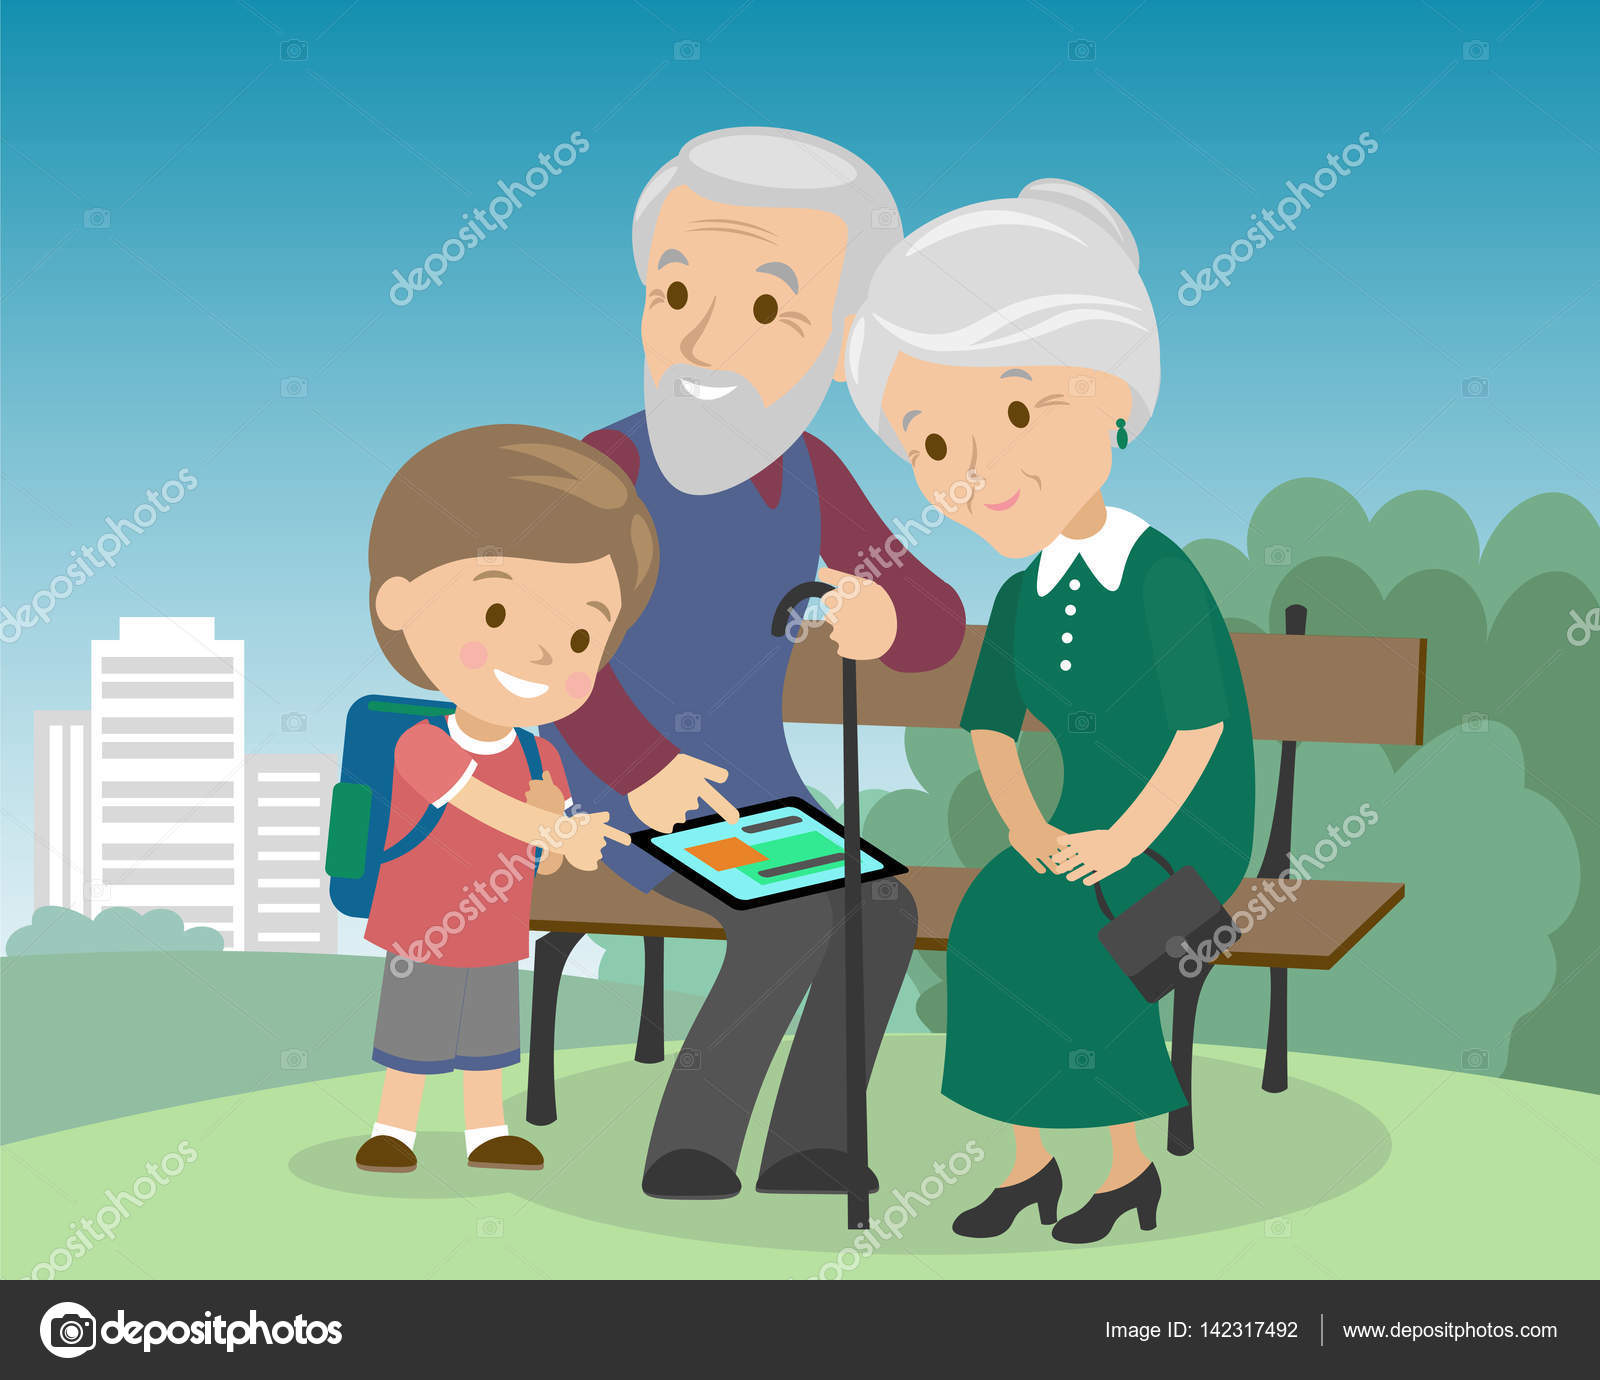 depositphotos_142317492 stock illustration grandson boy teach grandparents use